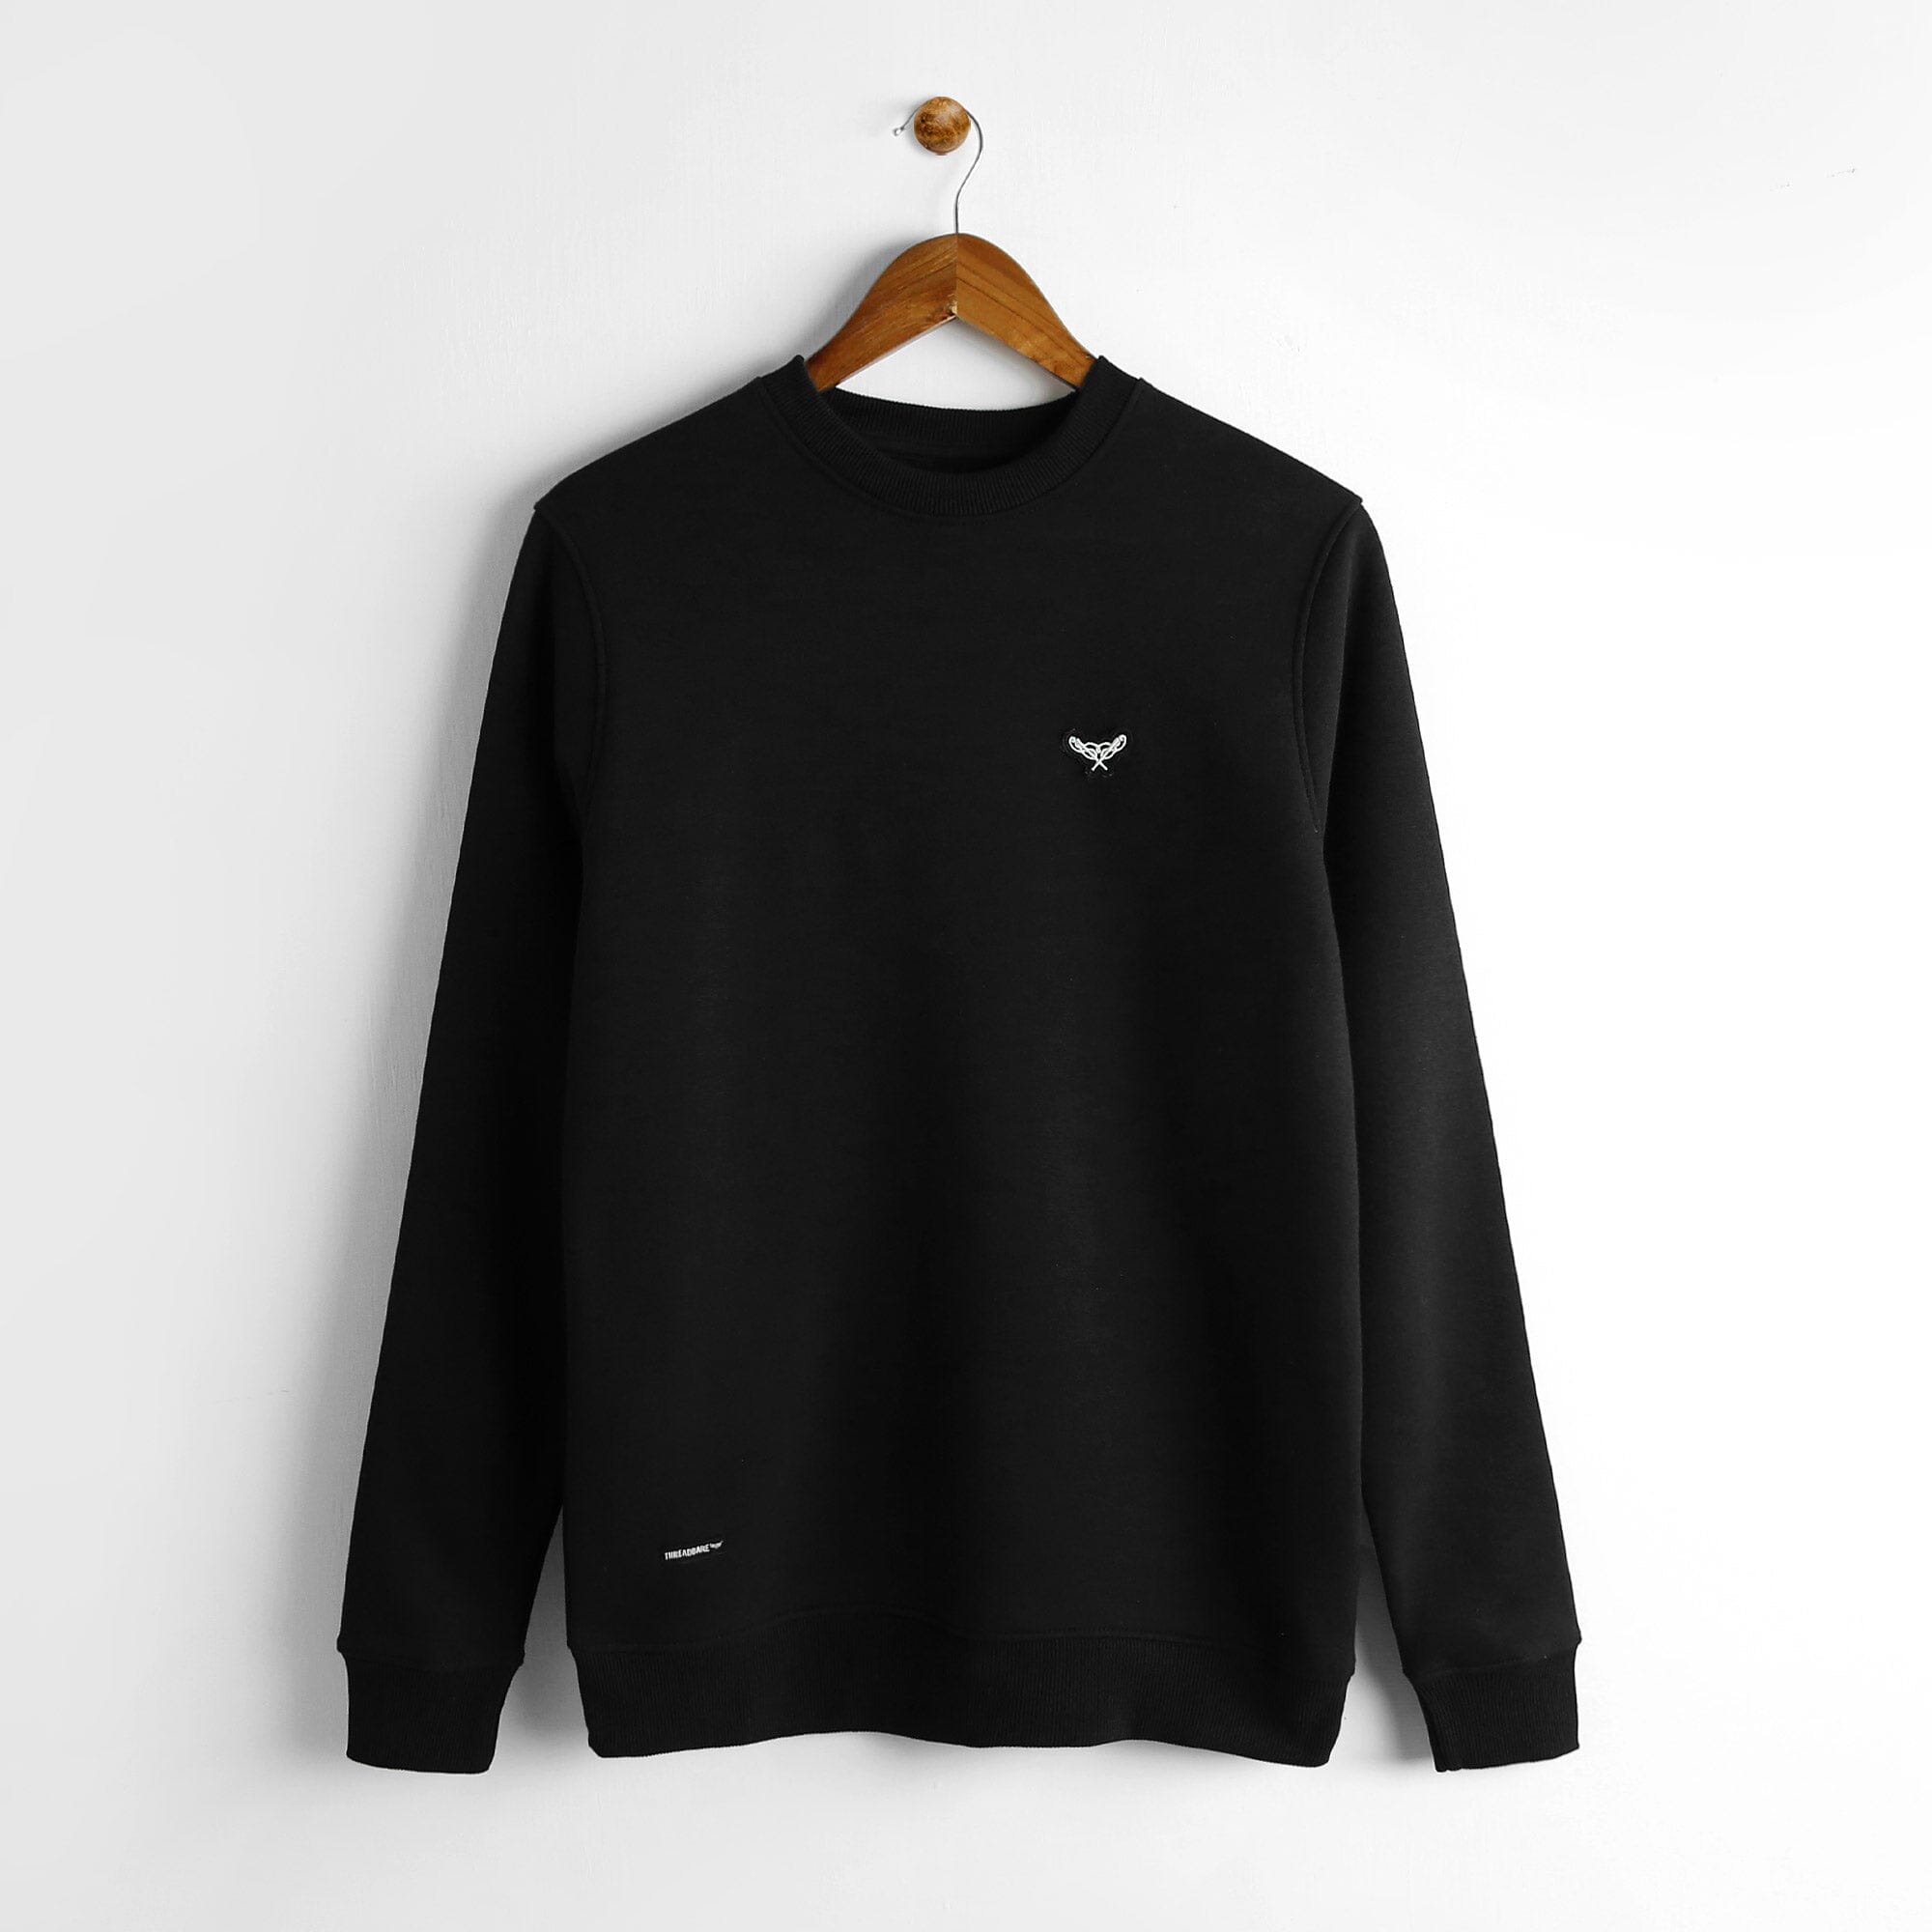 Premium Quality Black Soft Fleece Sweatshirt For Men (121022)